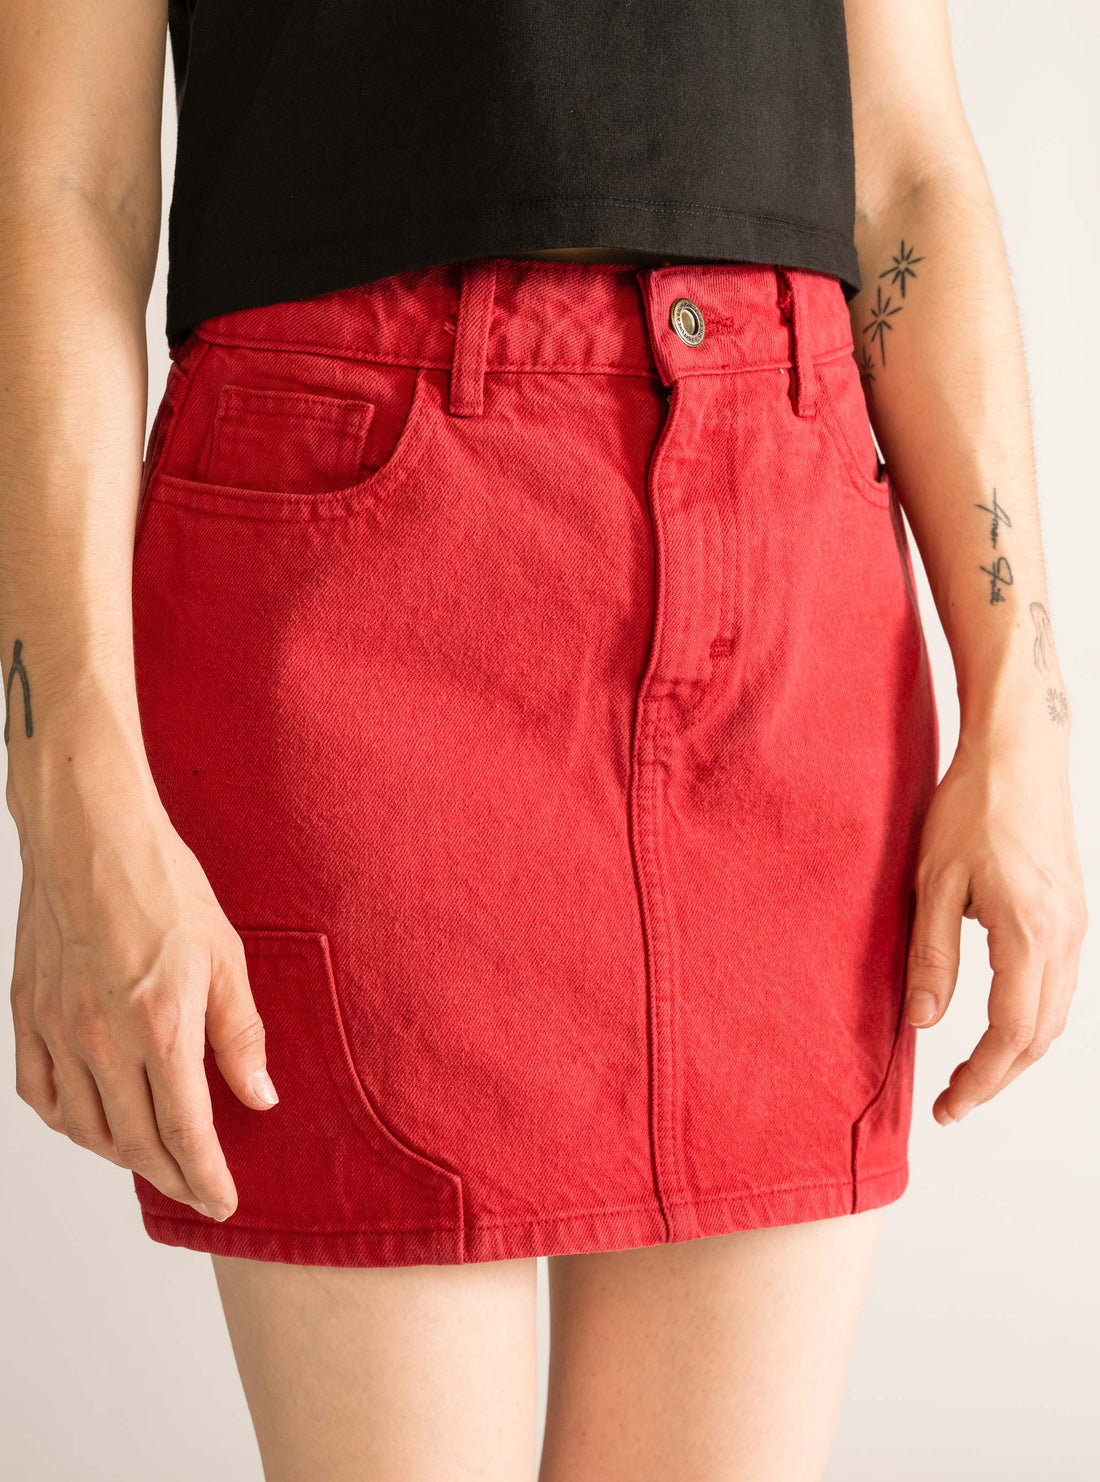 Aries Season Mini Skirt, Rojo